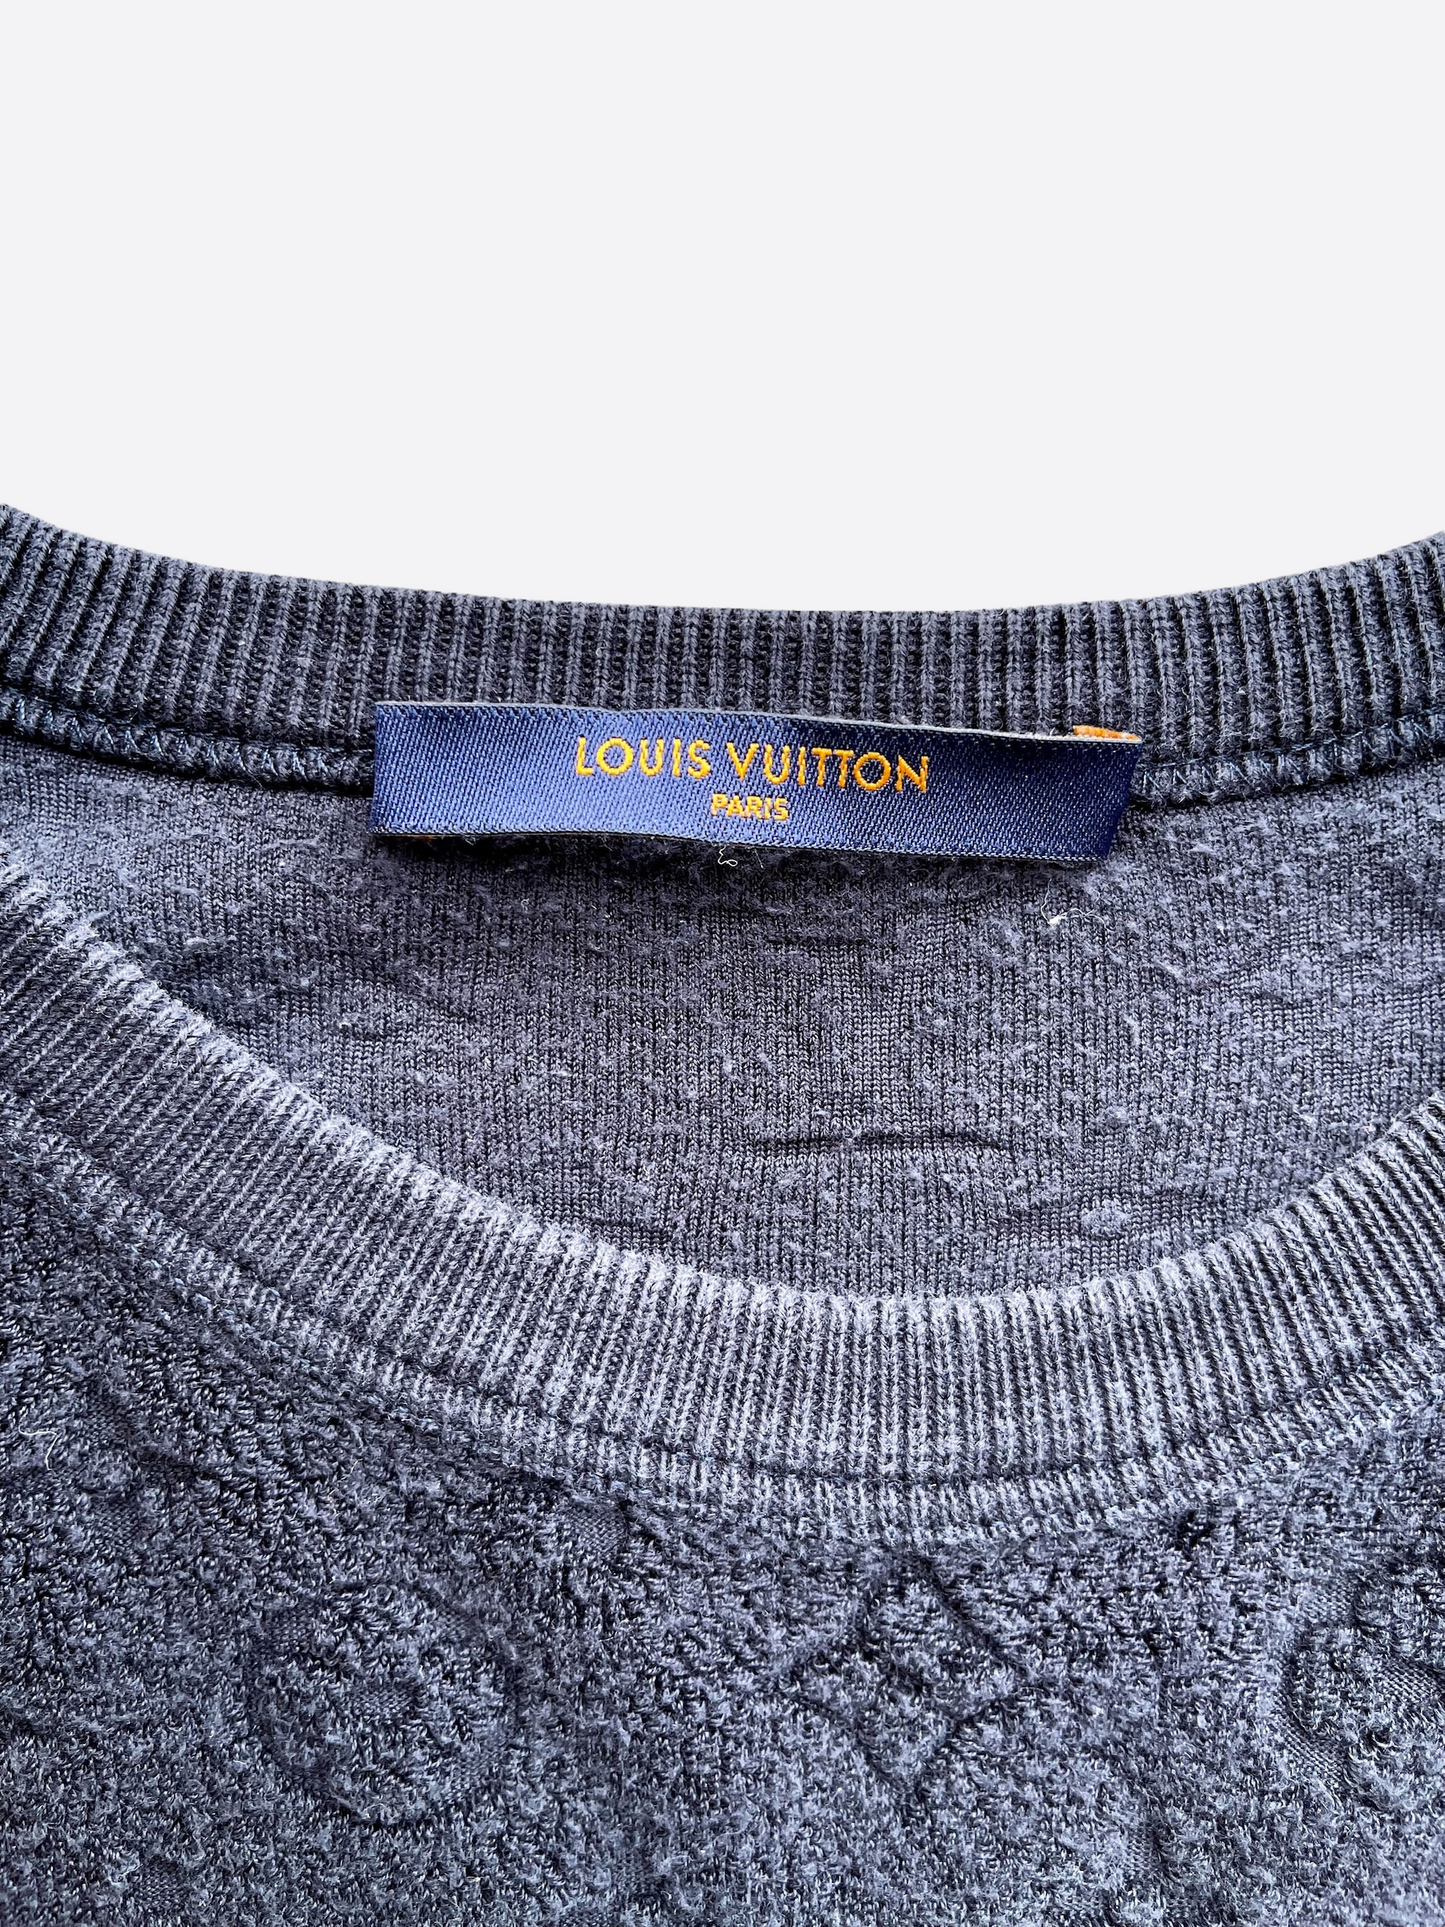 Louis Vuitton Monogram Towel